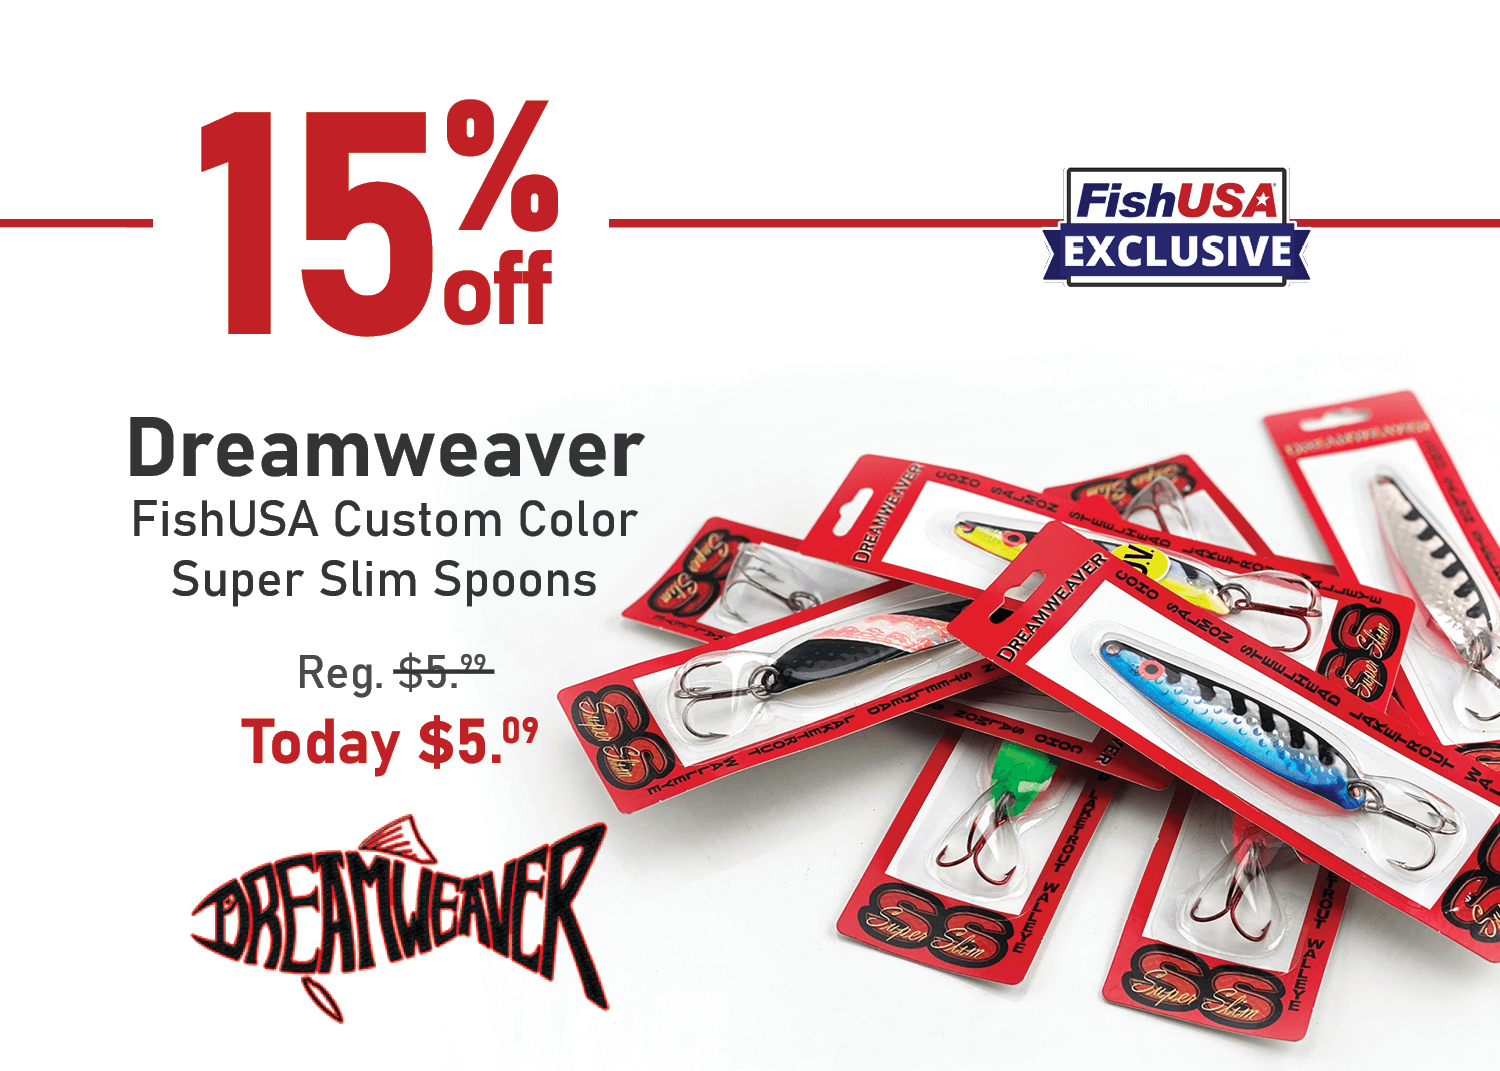 Save 15% on the Dreamweaver FishUSA Custom Color Super Slim Spoon!